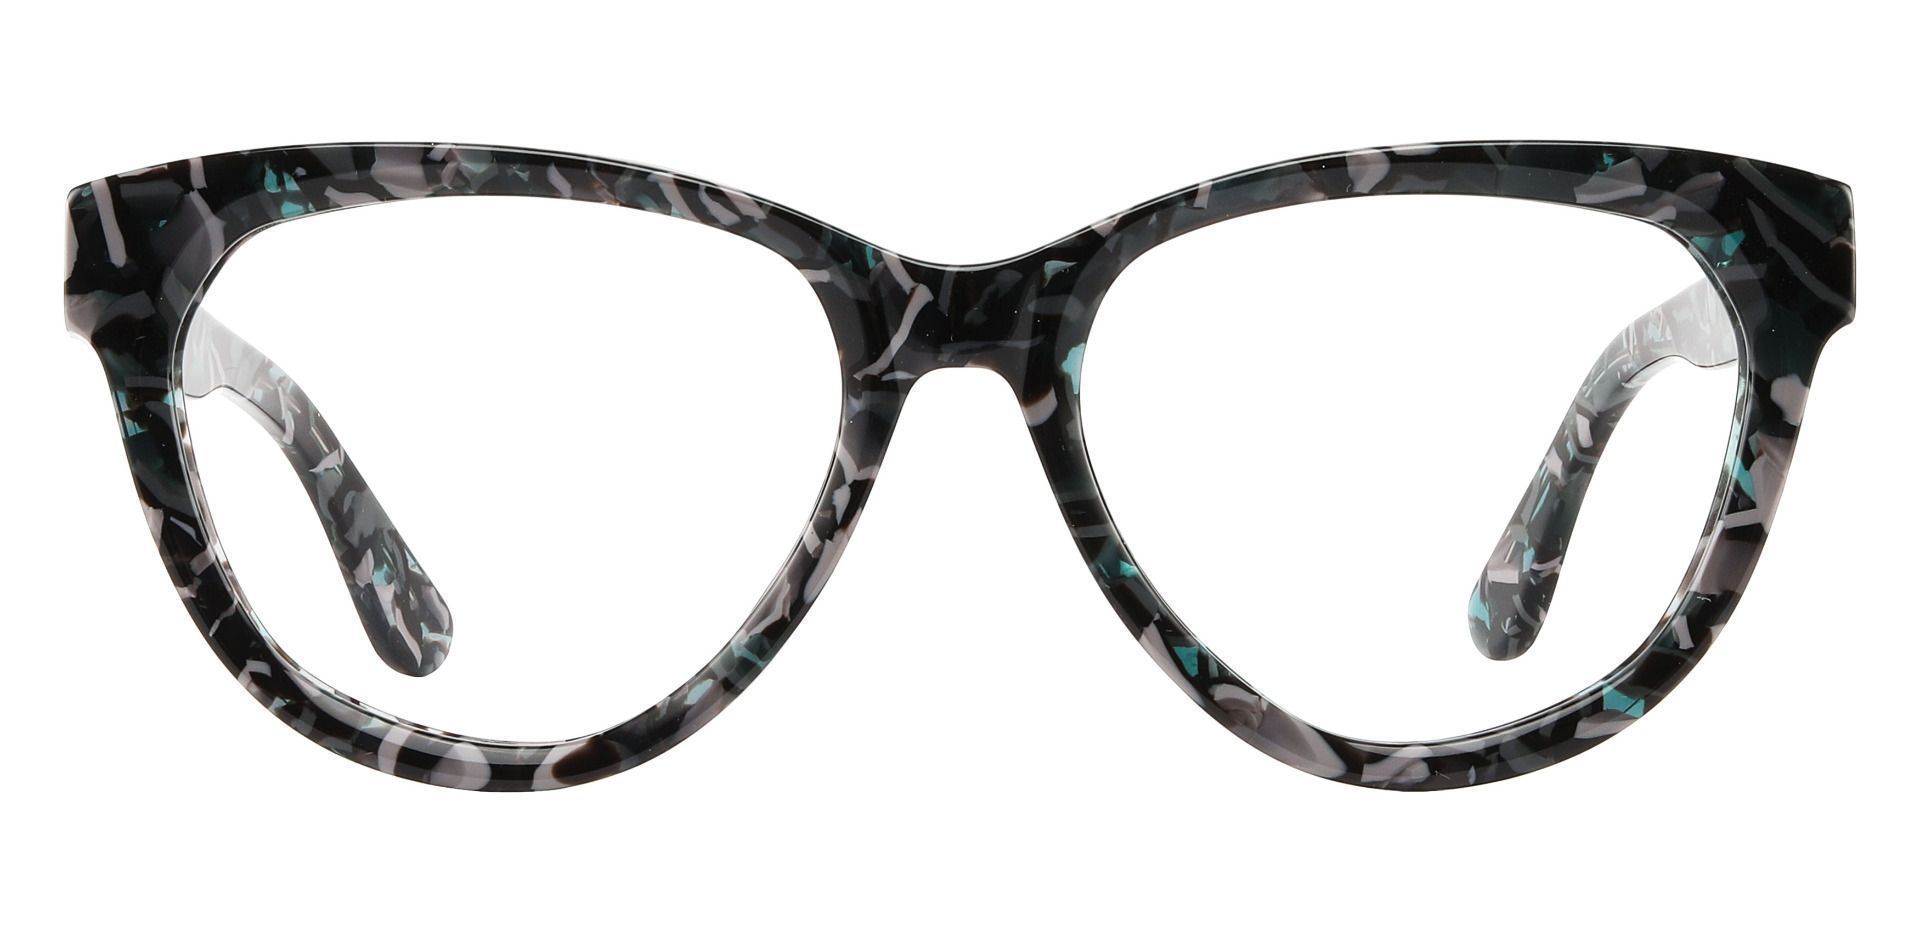 Vienna Cat Eye Prescription Glasses - Floral | Women's Eyeglasses ...